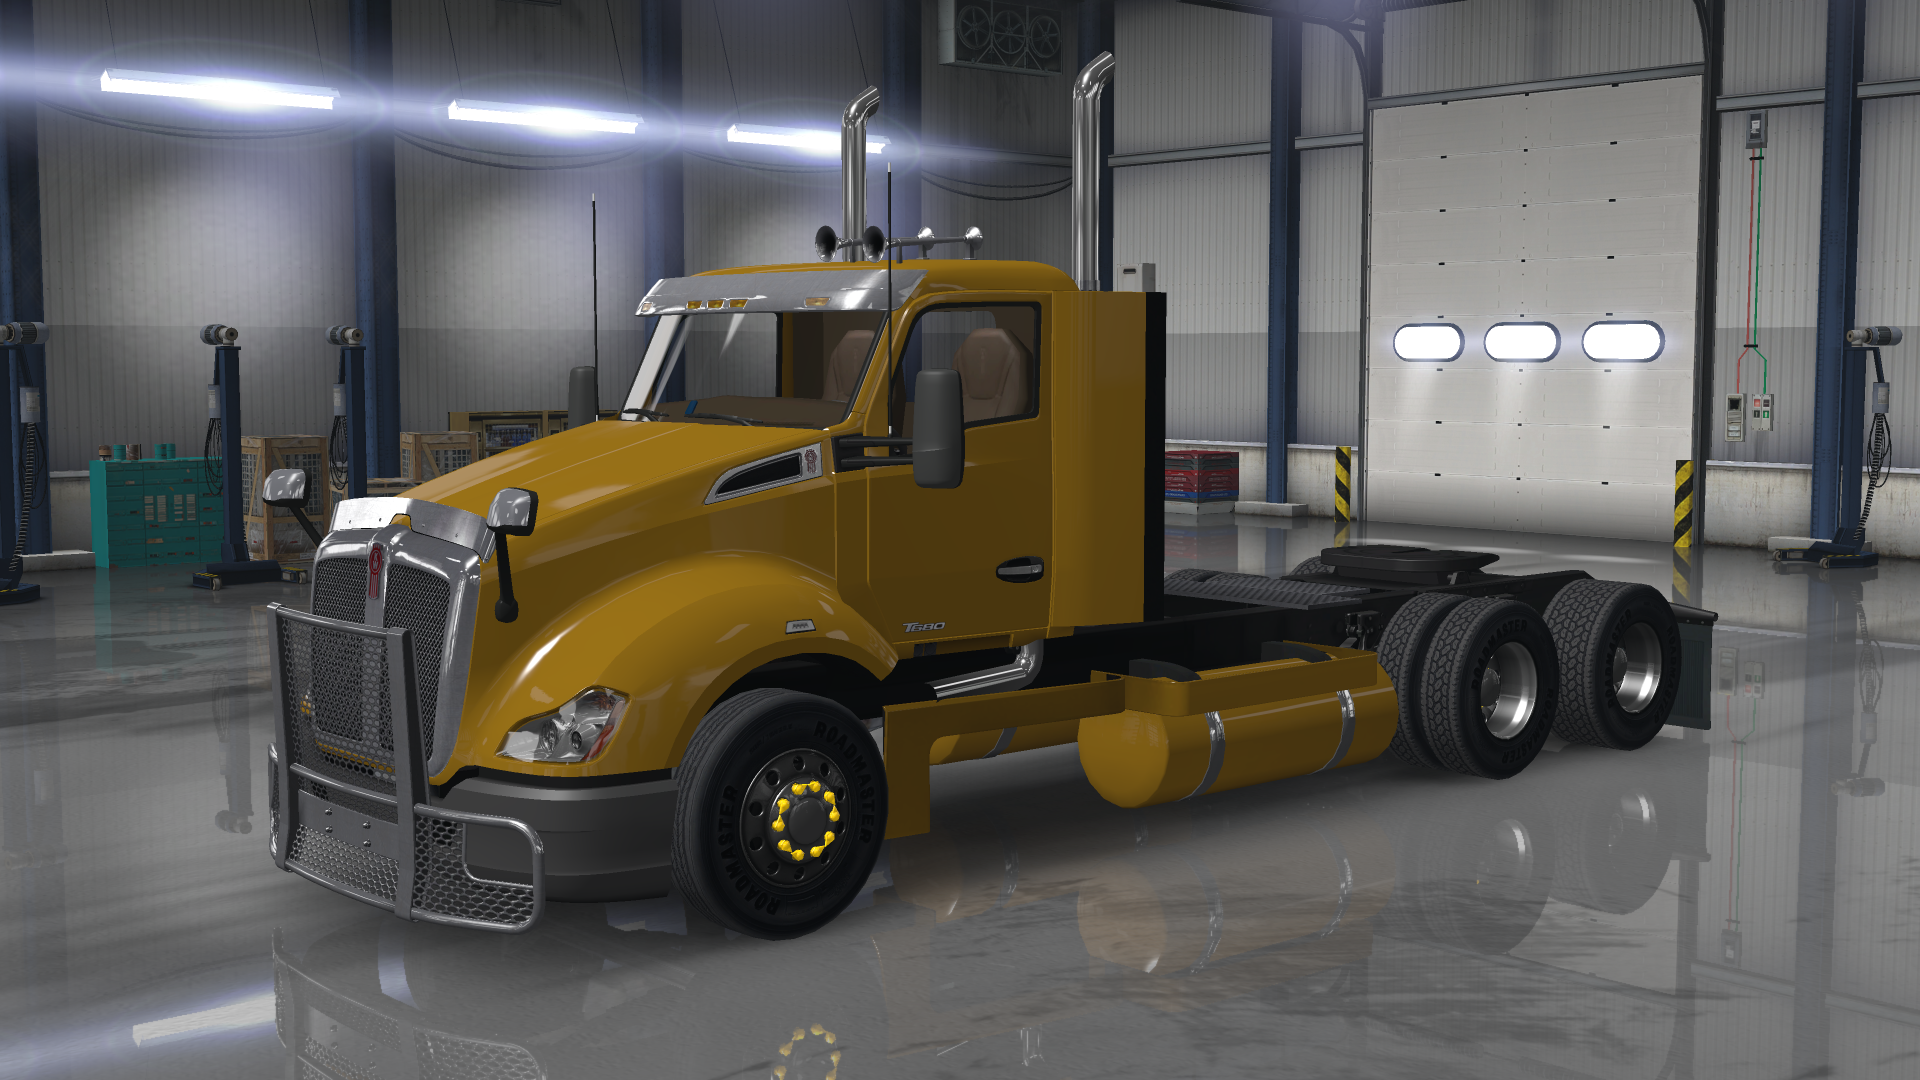 Truck Transportation Vehicle 